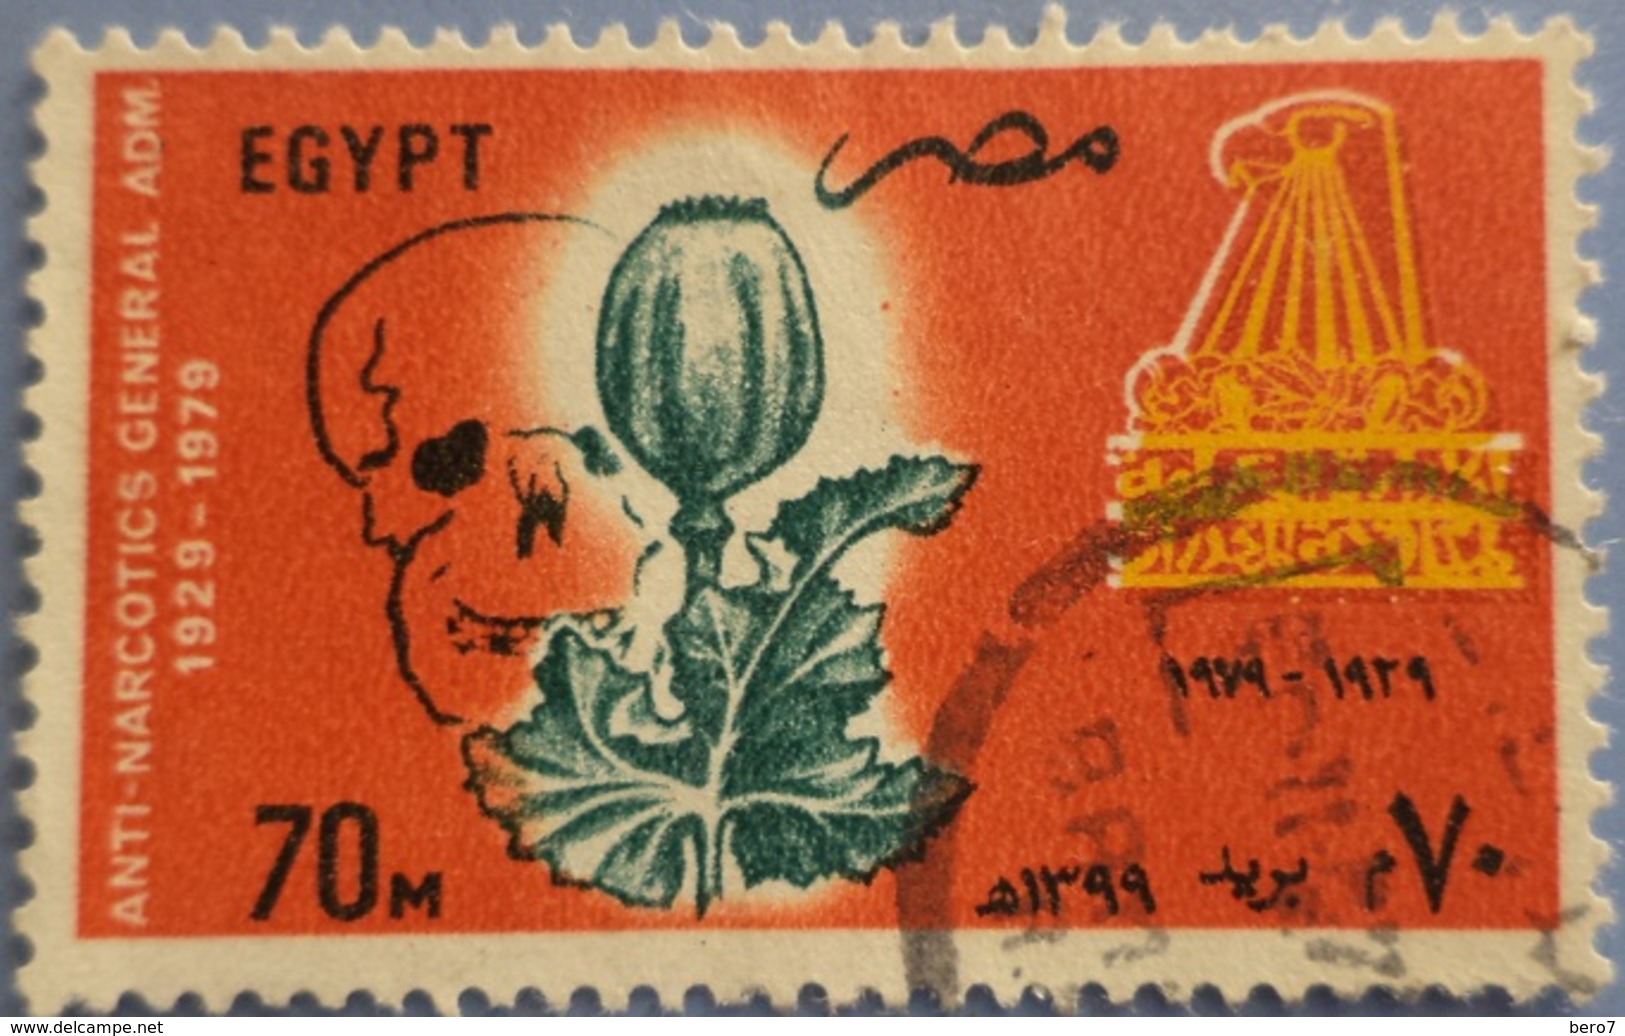 ُEGYPT 1979 The 50th Anniversary Of Anti-narcotics General Admn [USED] (Egypte) (Egitto) (Ägypten) (Egipto) (Egypten} - Gebraucht